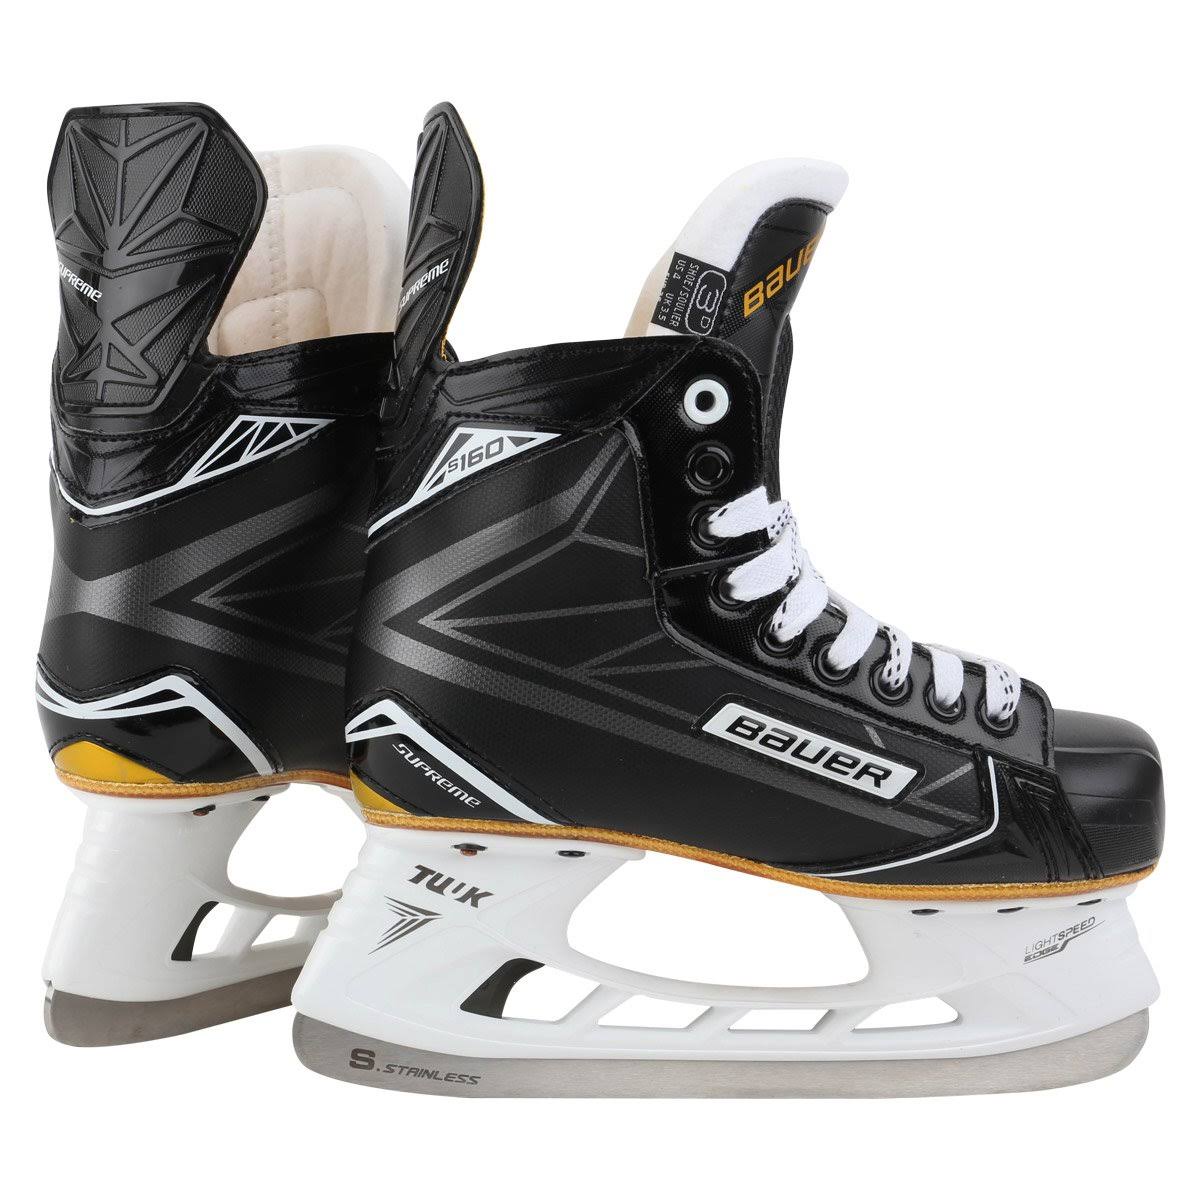 Bauer Supreme S160 Junior Ice Hockey Skates, 5.5